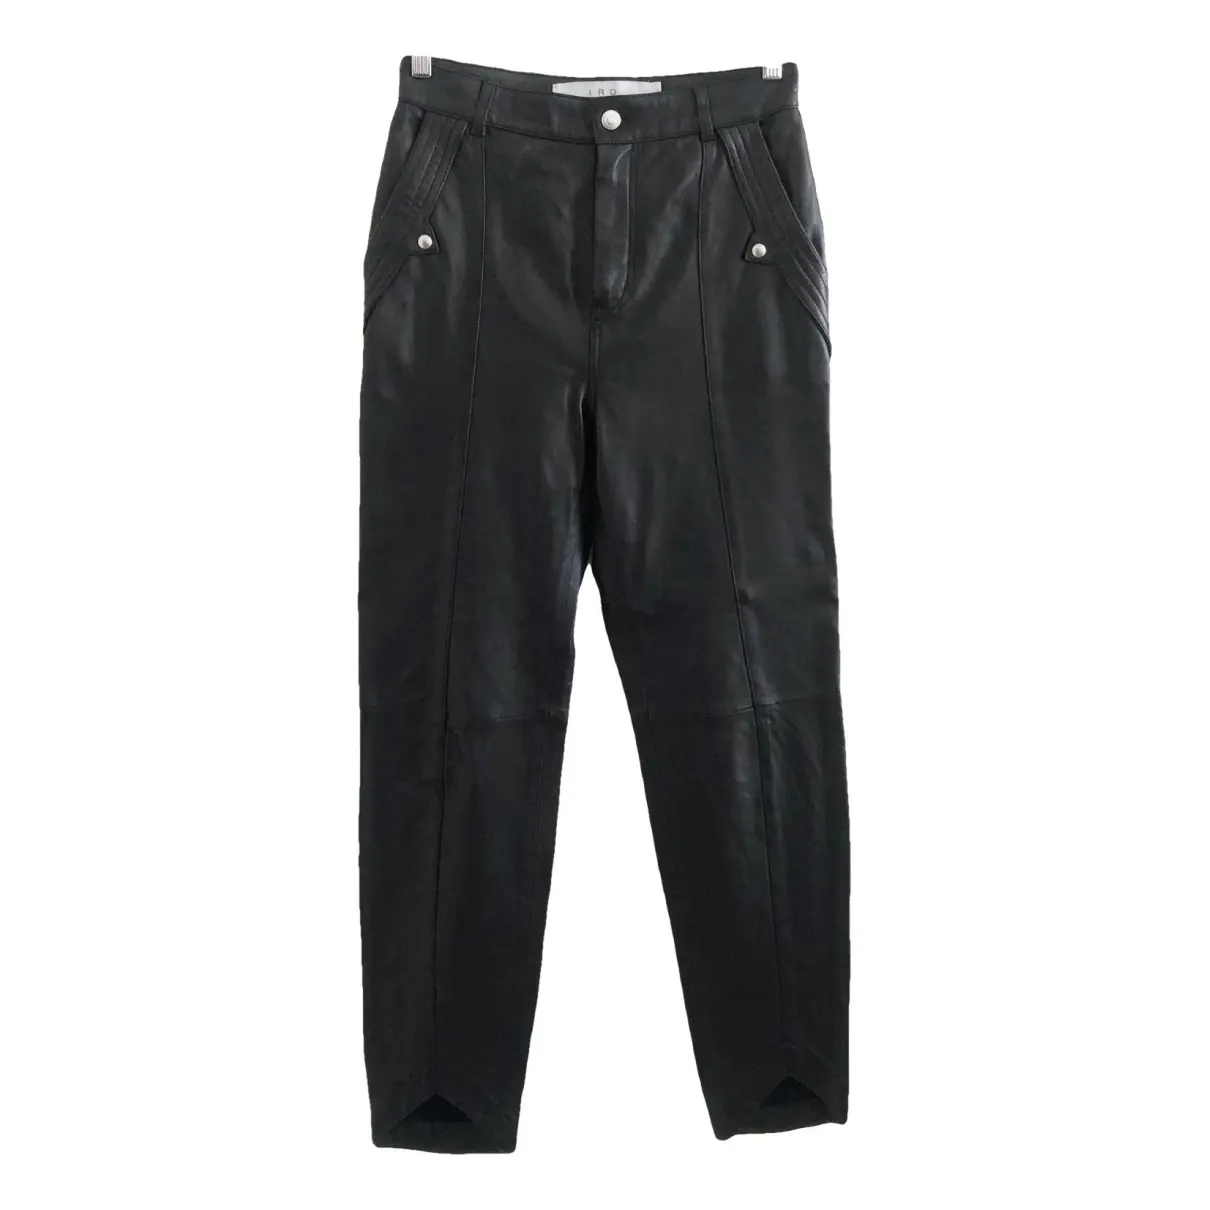 Leather trousers Iro